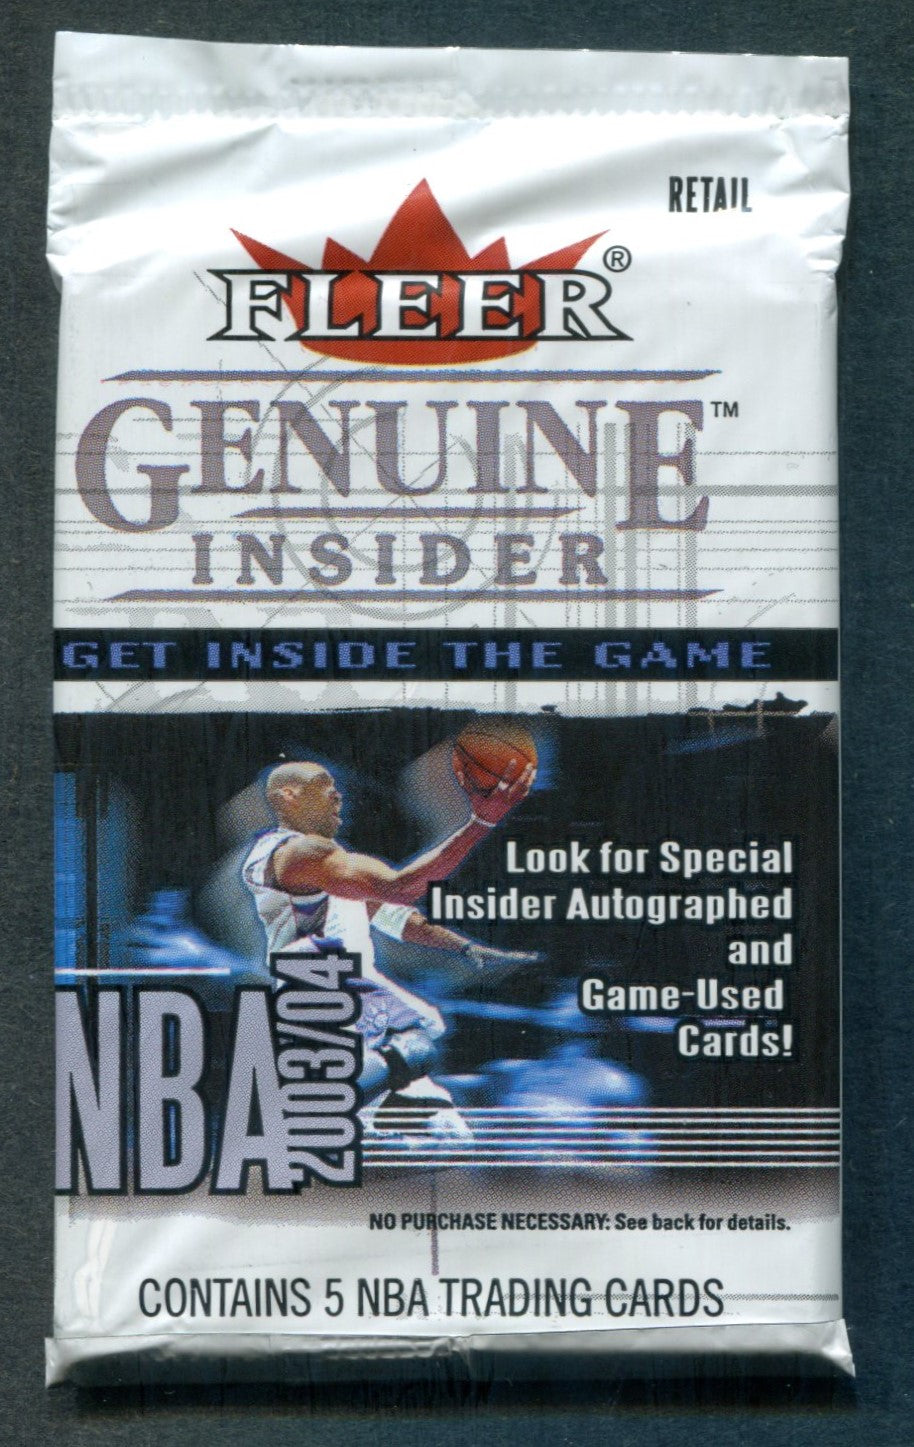 2003/04 Fleer Genuine Insider Basketball Unopened Pack (Retail)